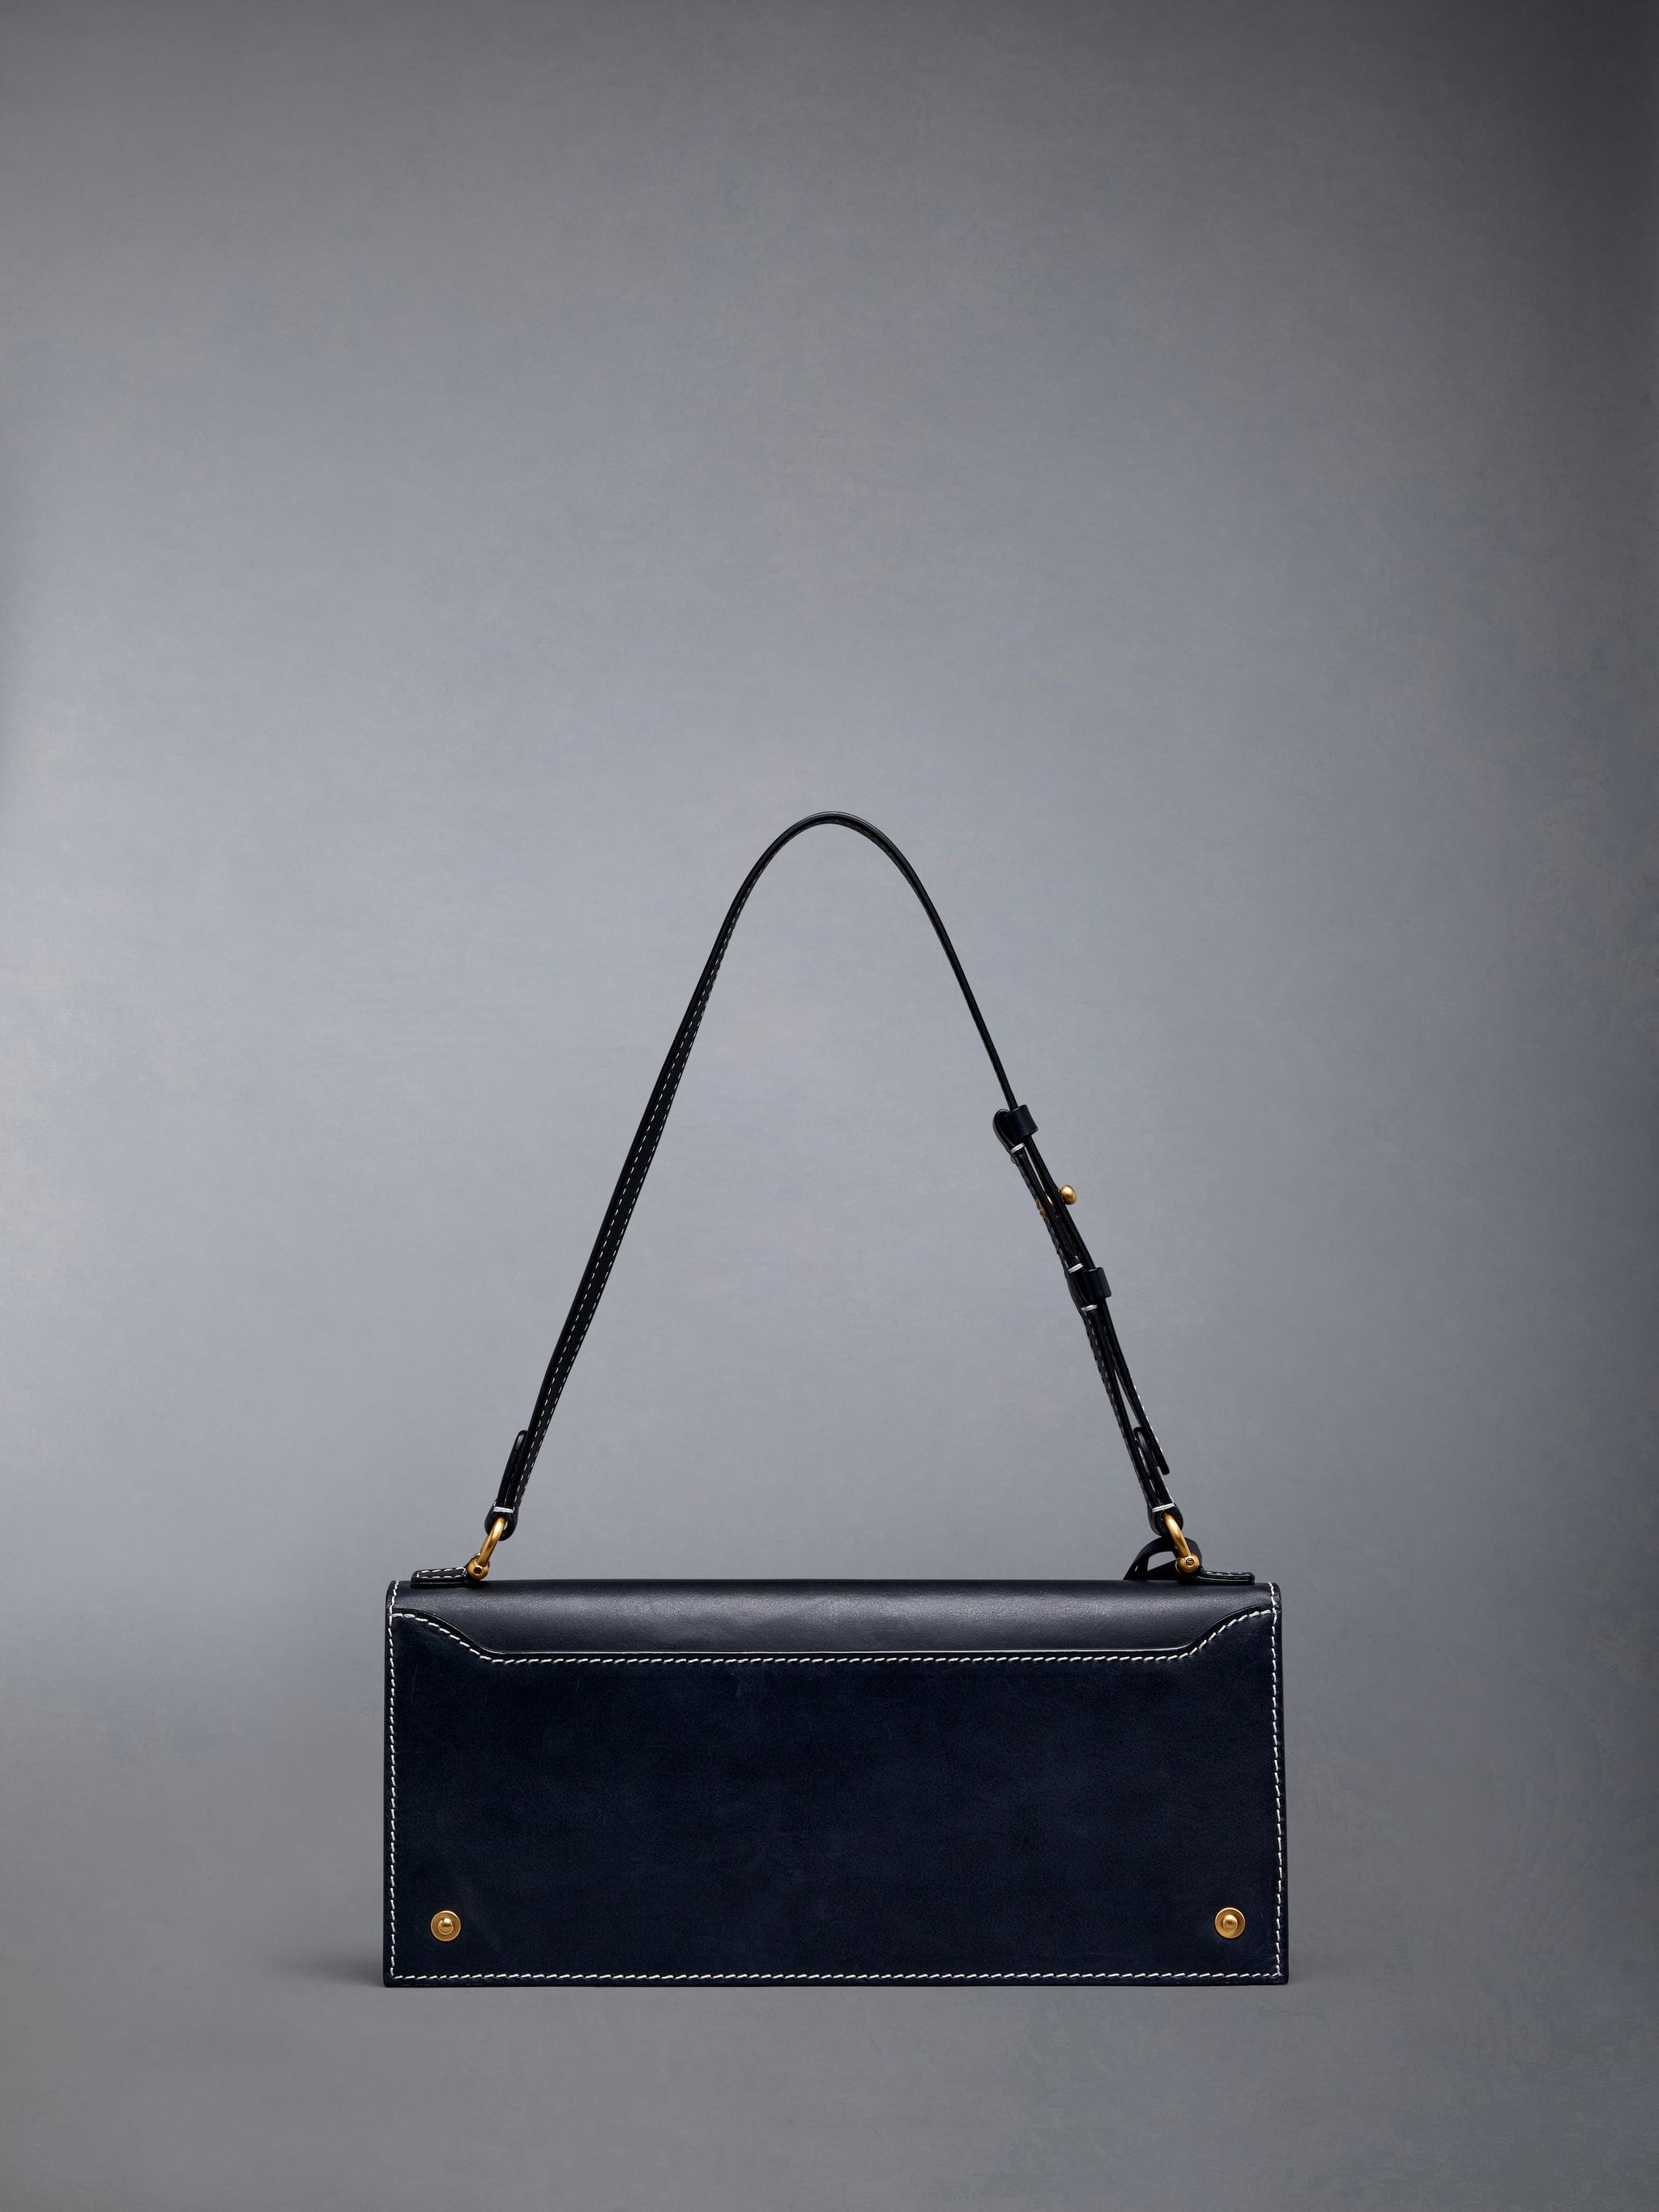 Enamel Flower Twist Handbag: Luxury Designer Medium Sized Bag With